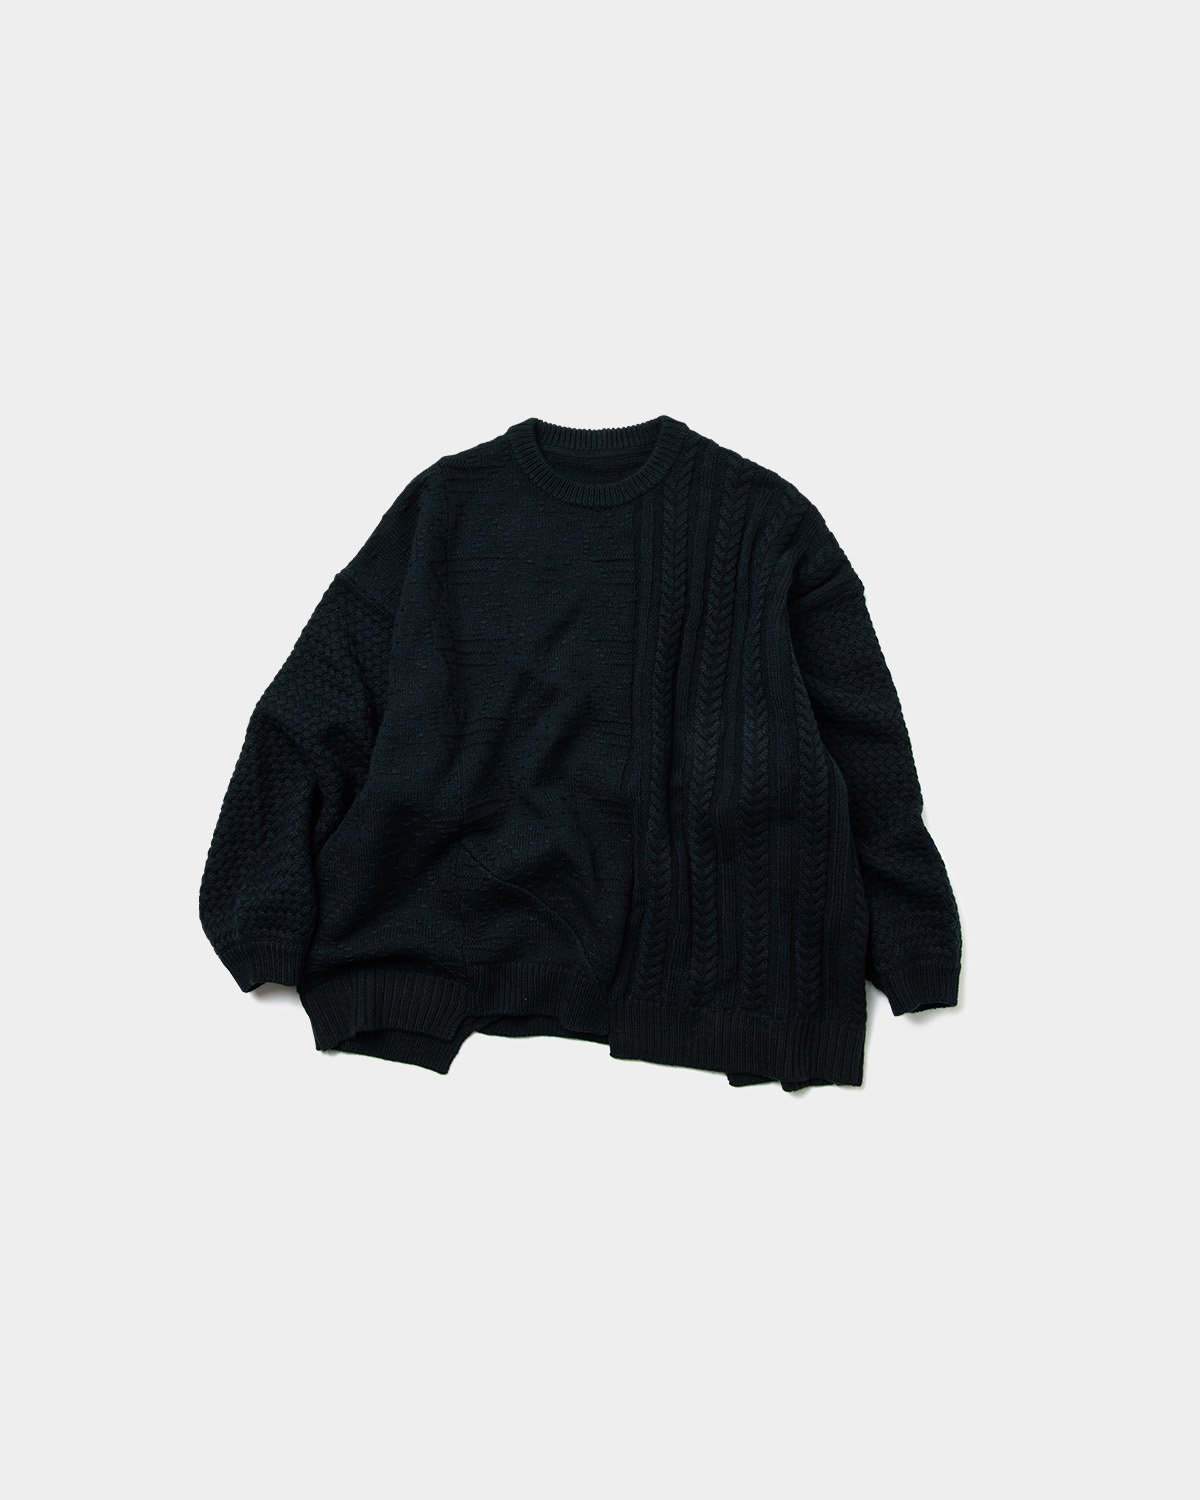 GOOPiMADE x TIGHTBOOTH Knit Sweater